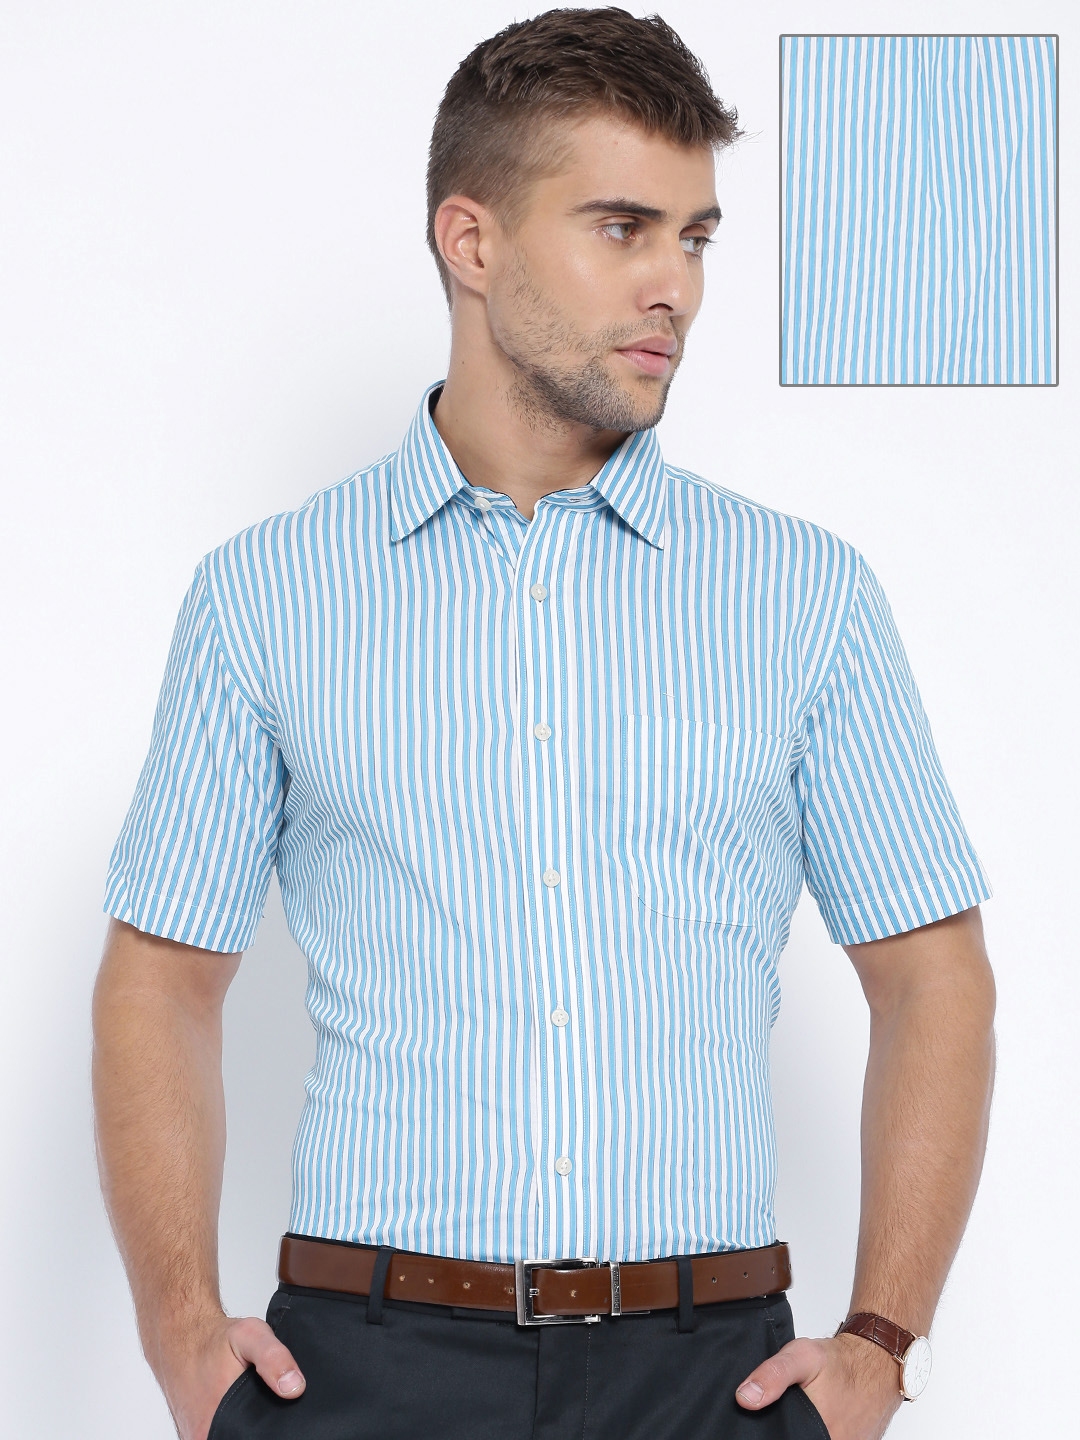 Buy Arrow White & Blue Striped Formal Shirt - Shirts for Men 1387795 ...